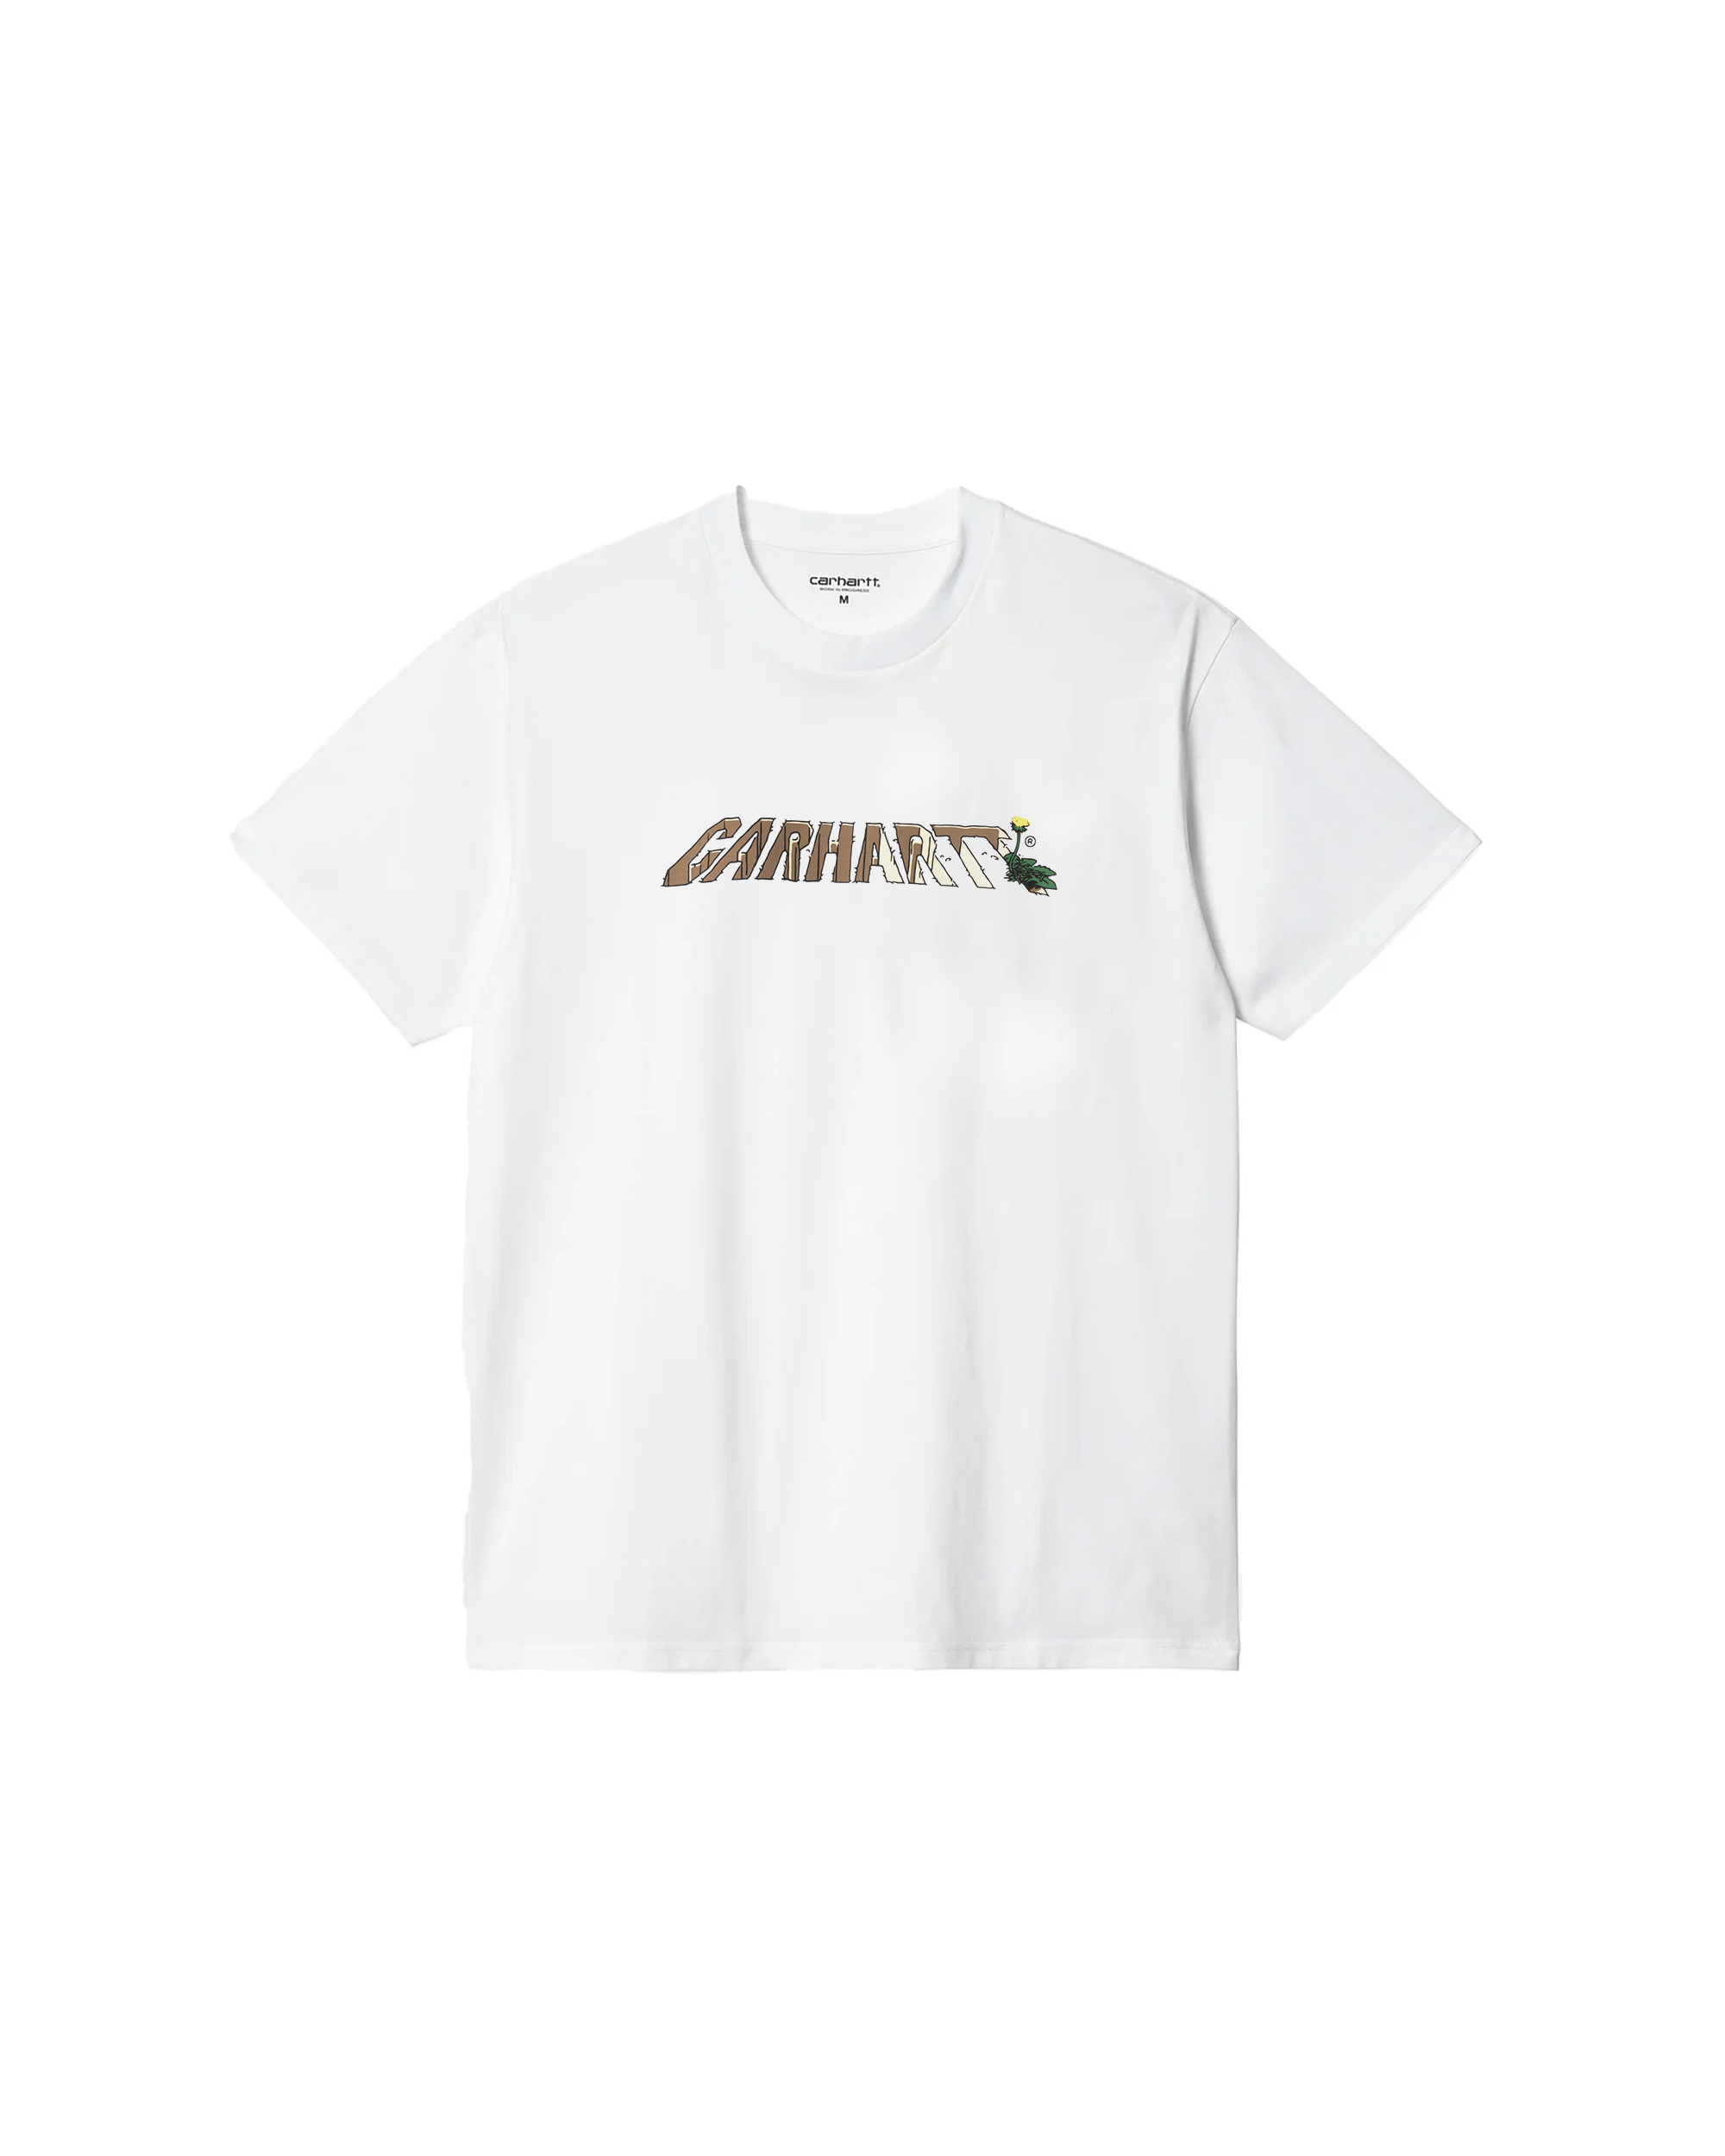 S/S Dandelion Script T-Shirt - White